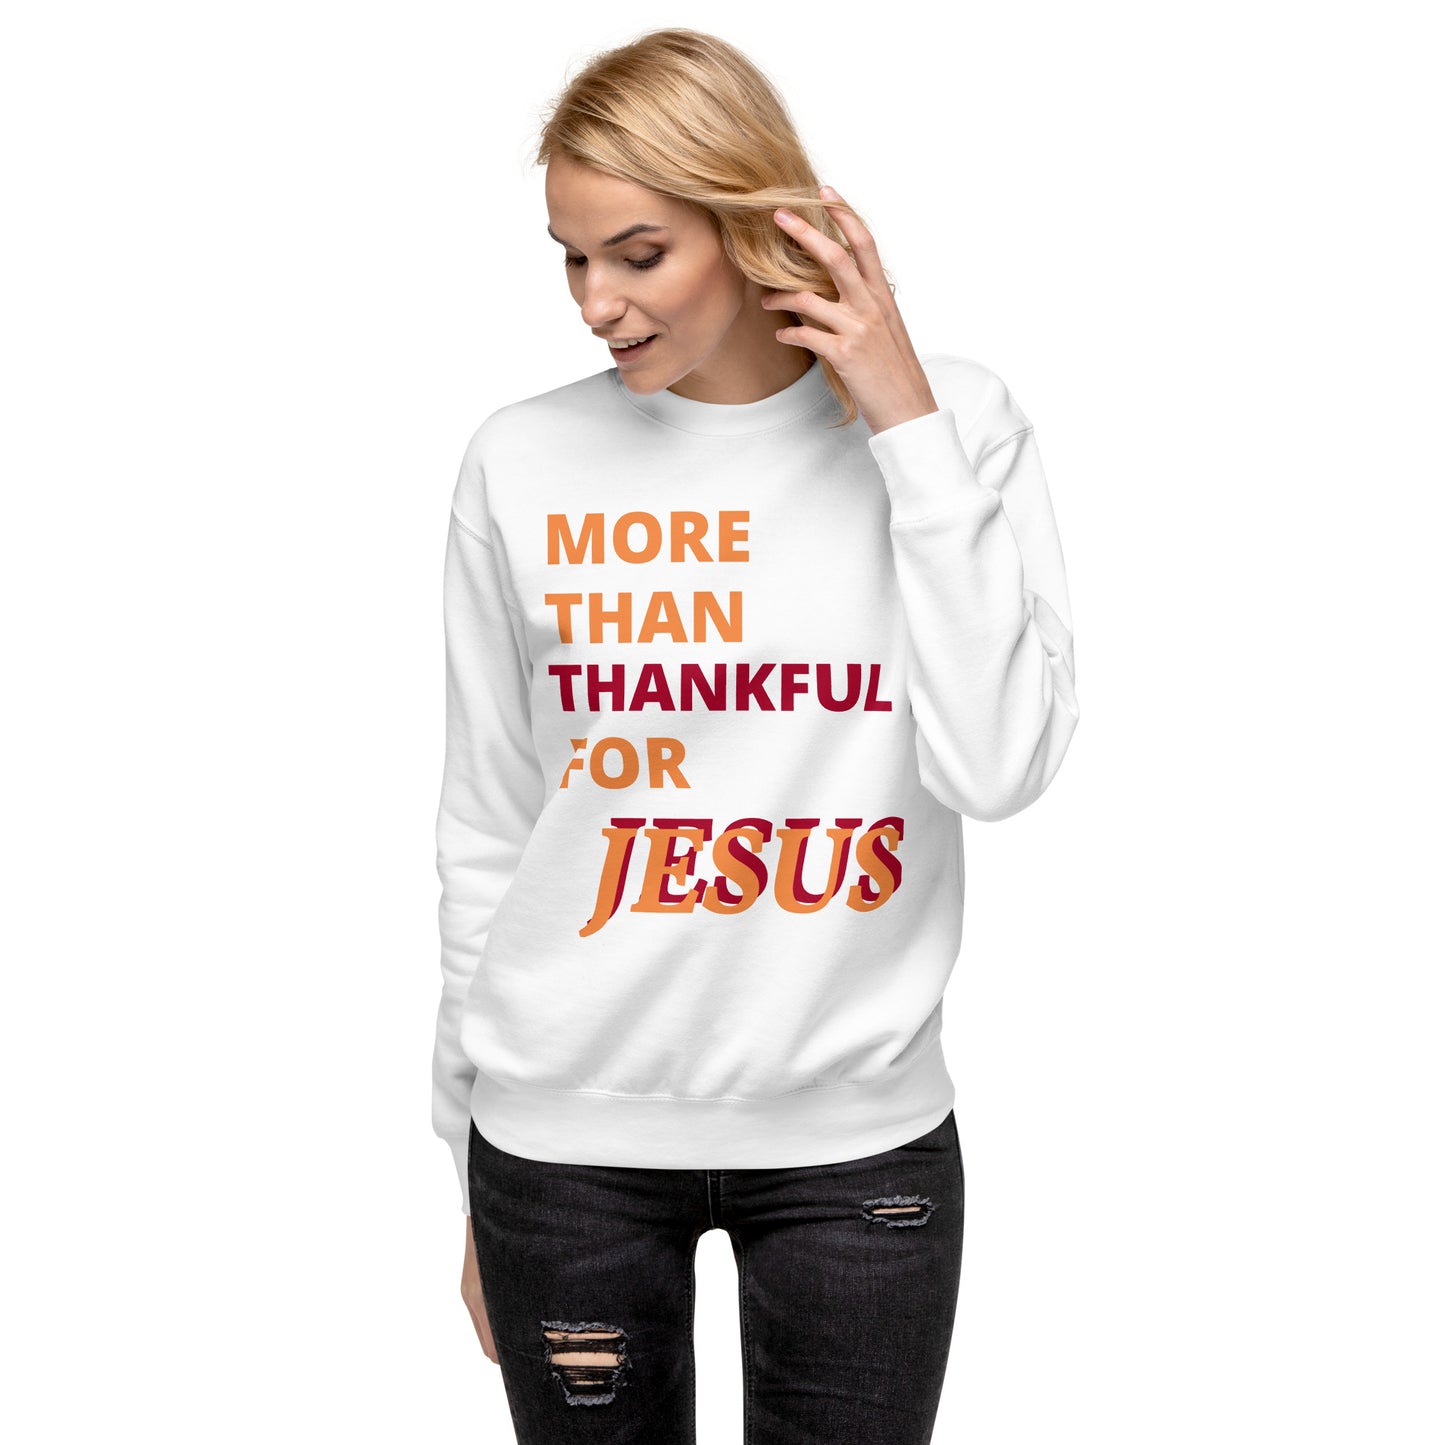 More Than Thankful Unisex Sweatshirt